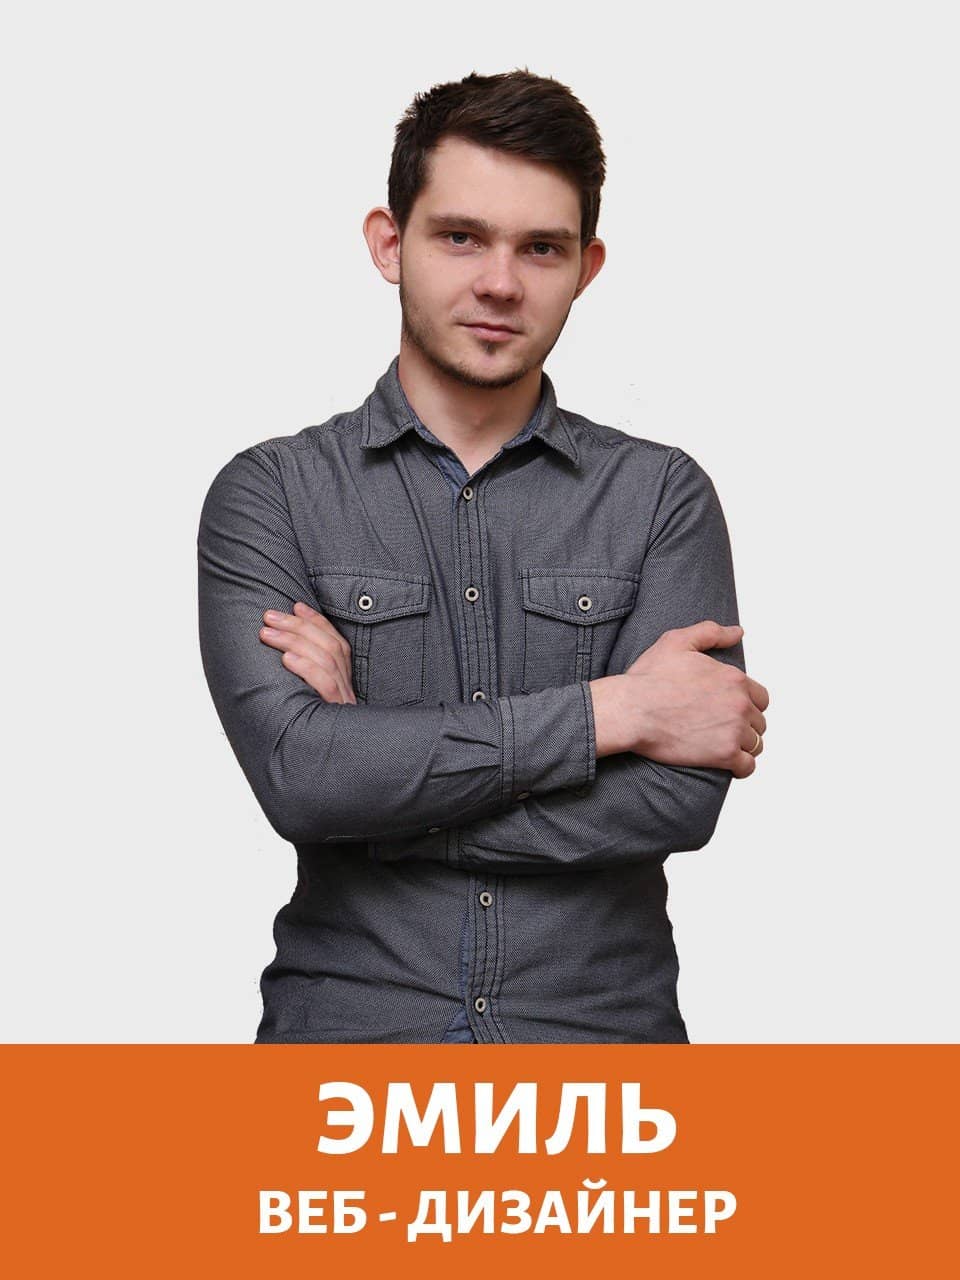 jemil veb dizajner - Создание сайтов в Атырау